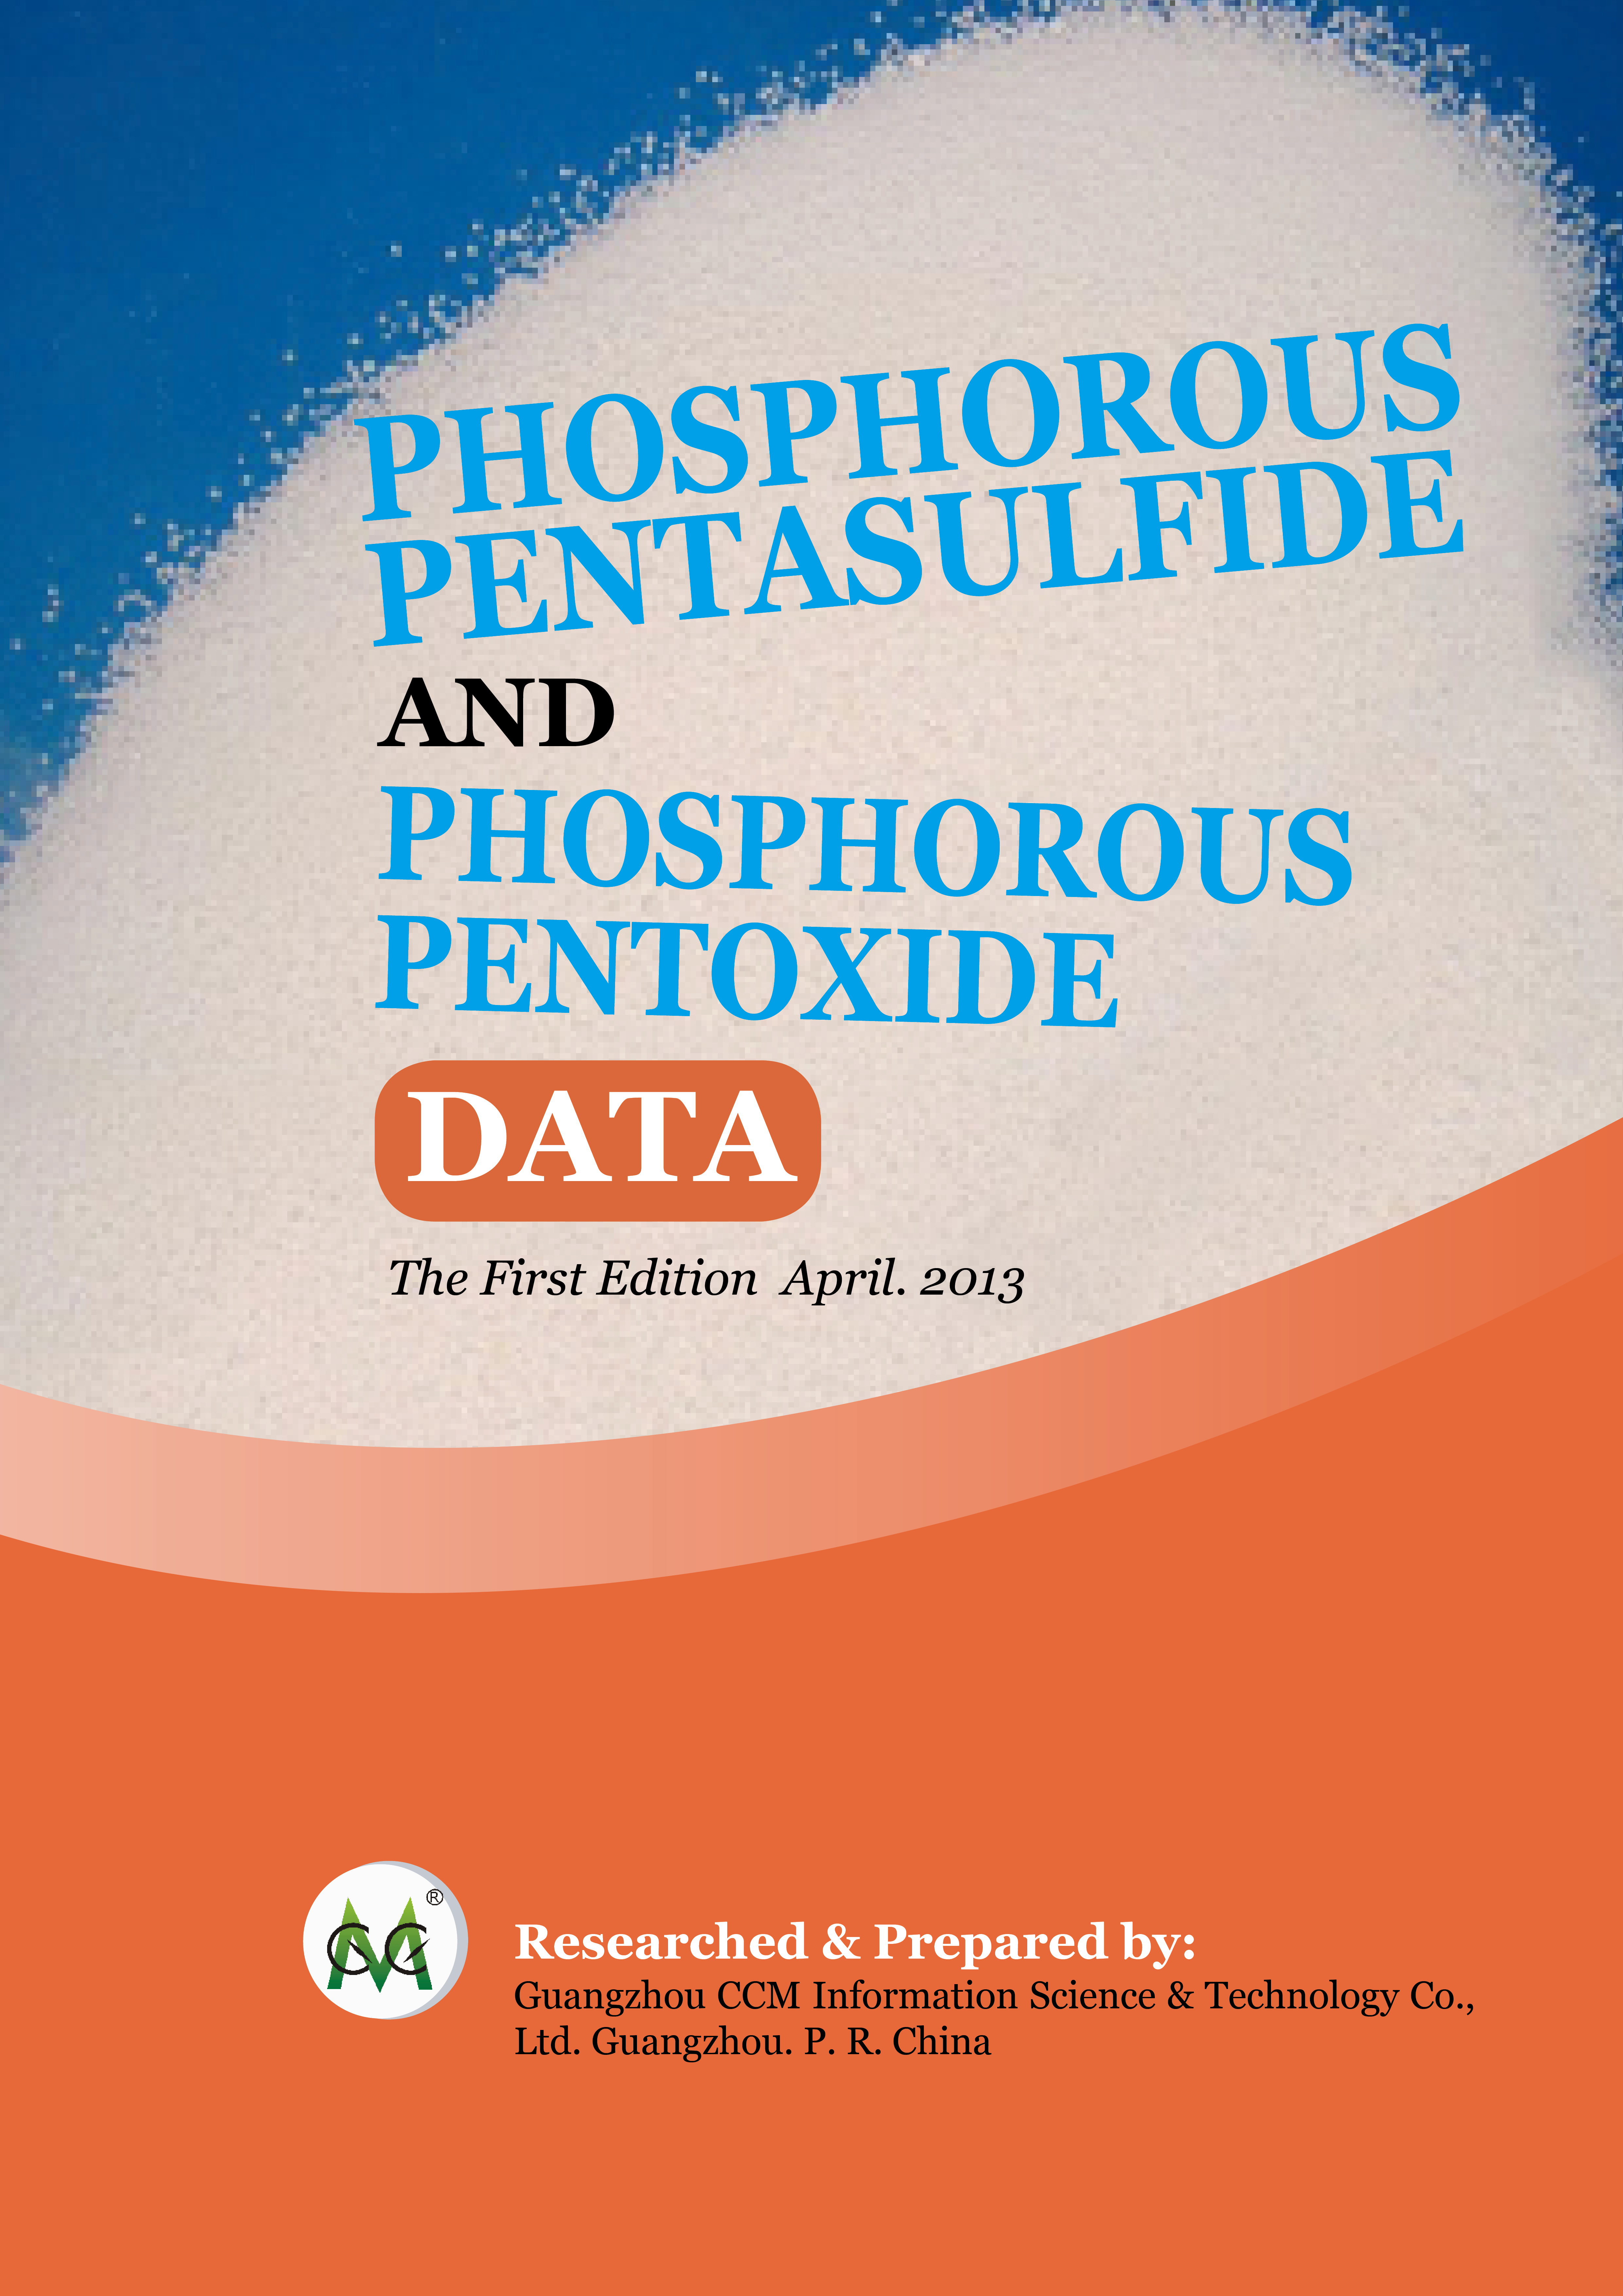 Phosphorous Pentasulfide and Phosphorous Pentoxide Data